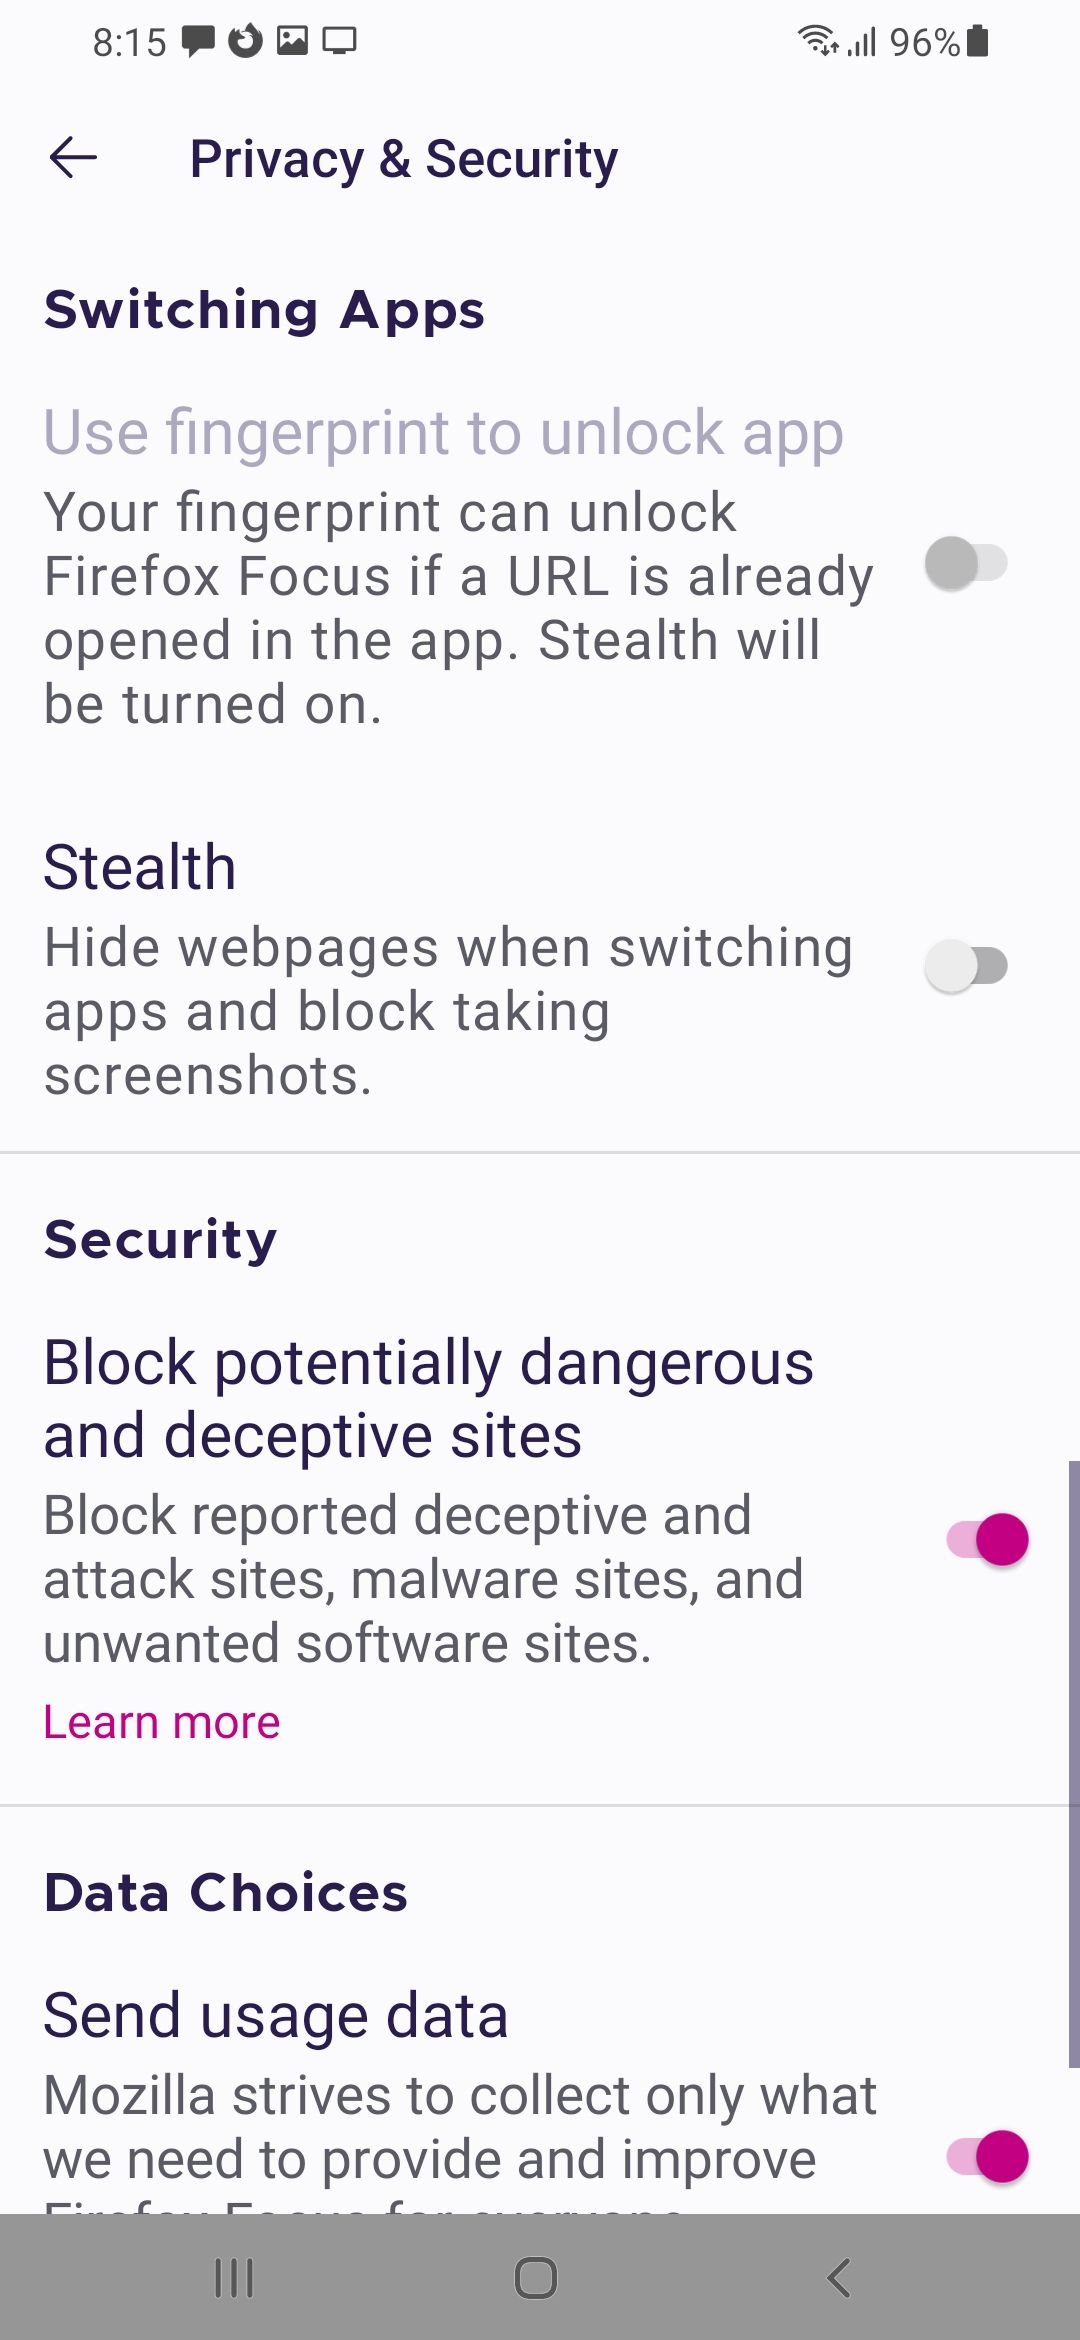 Enable Stealth Mode and Fingerprint on Firefox Focus